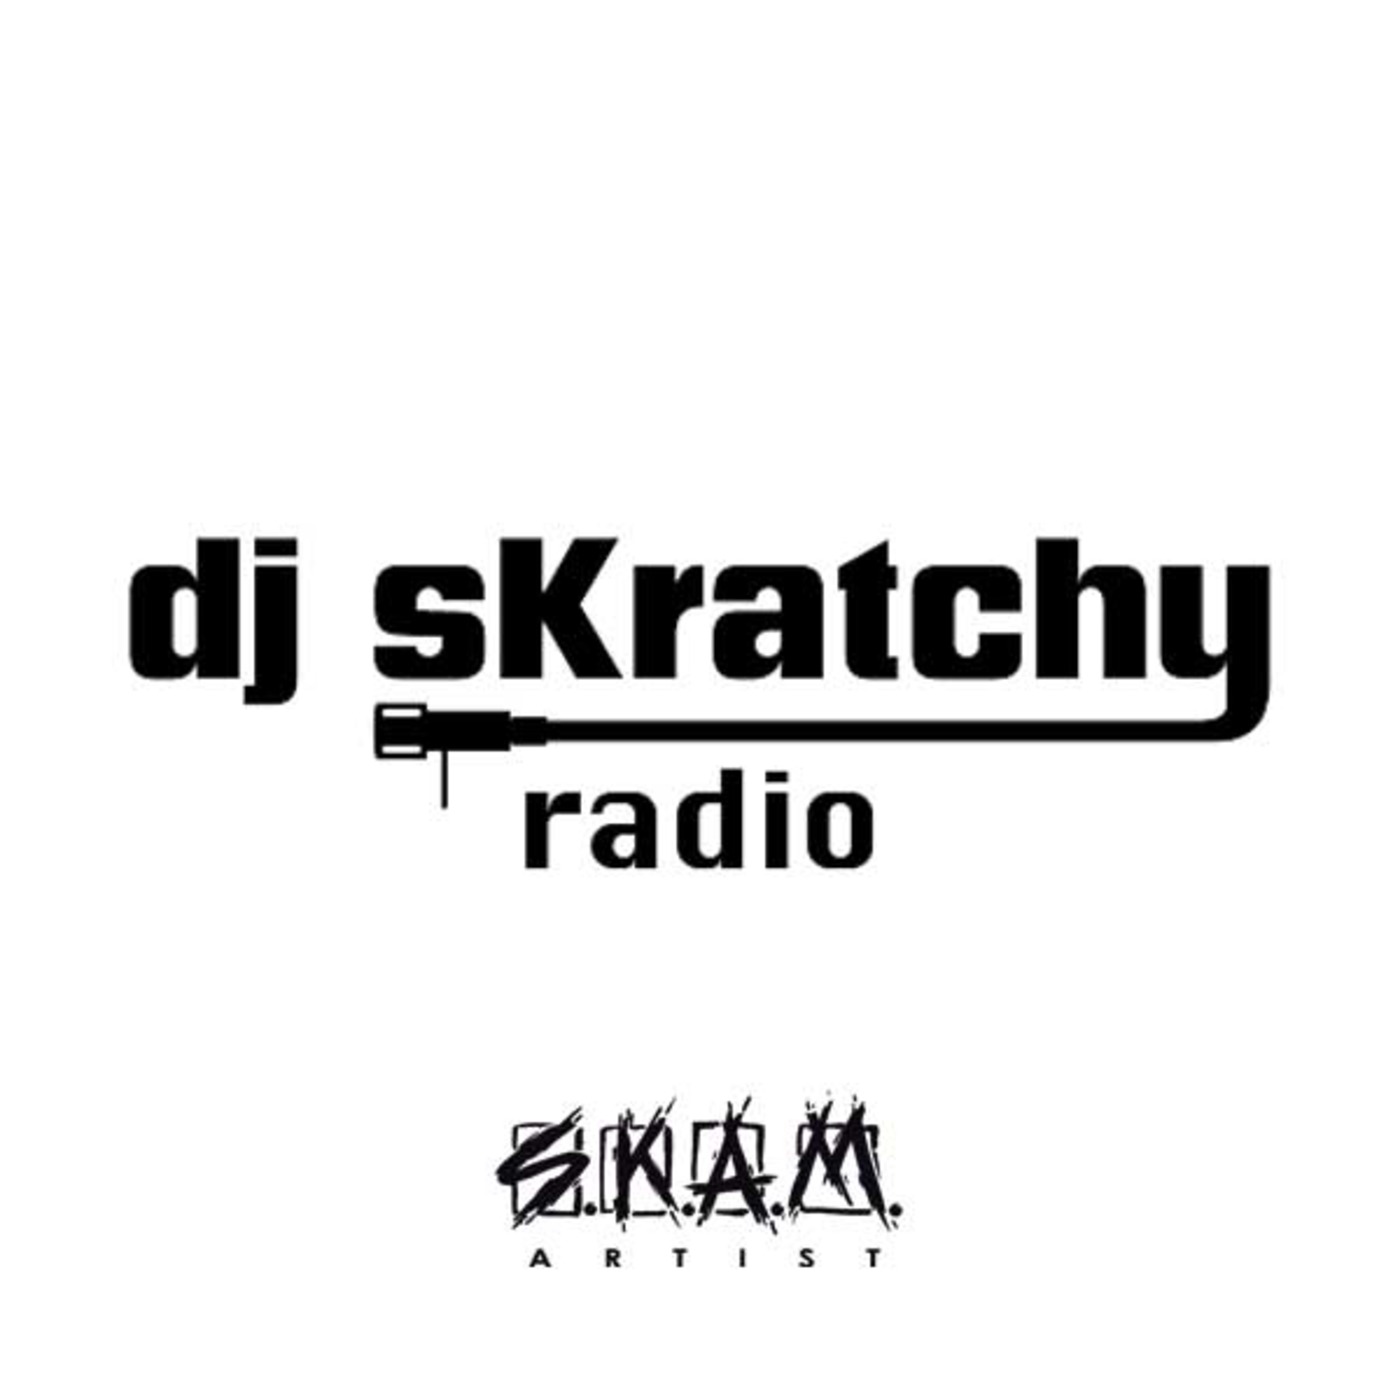 dj sKratchy | SKAM Artist - February 2012 Podcast